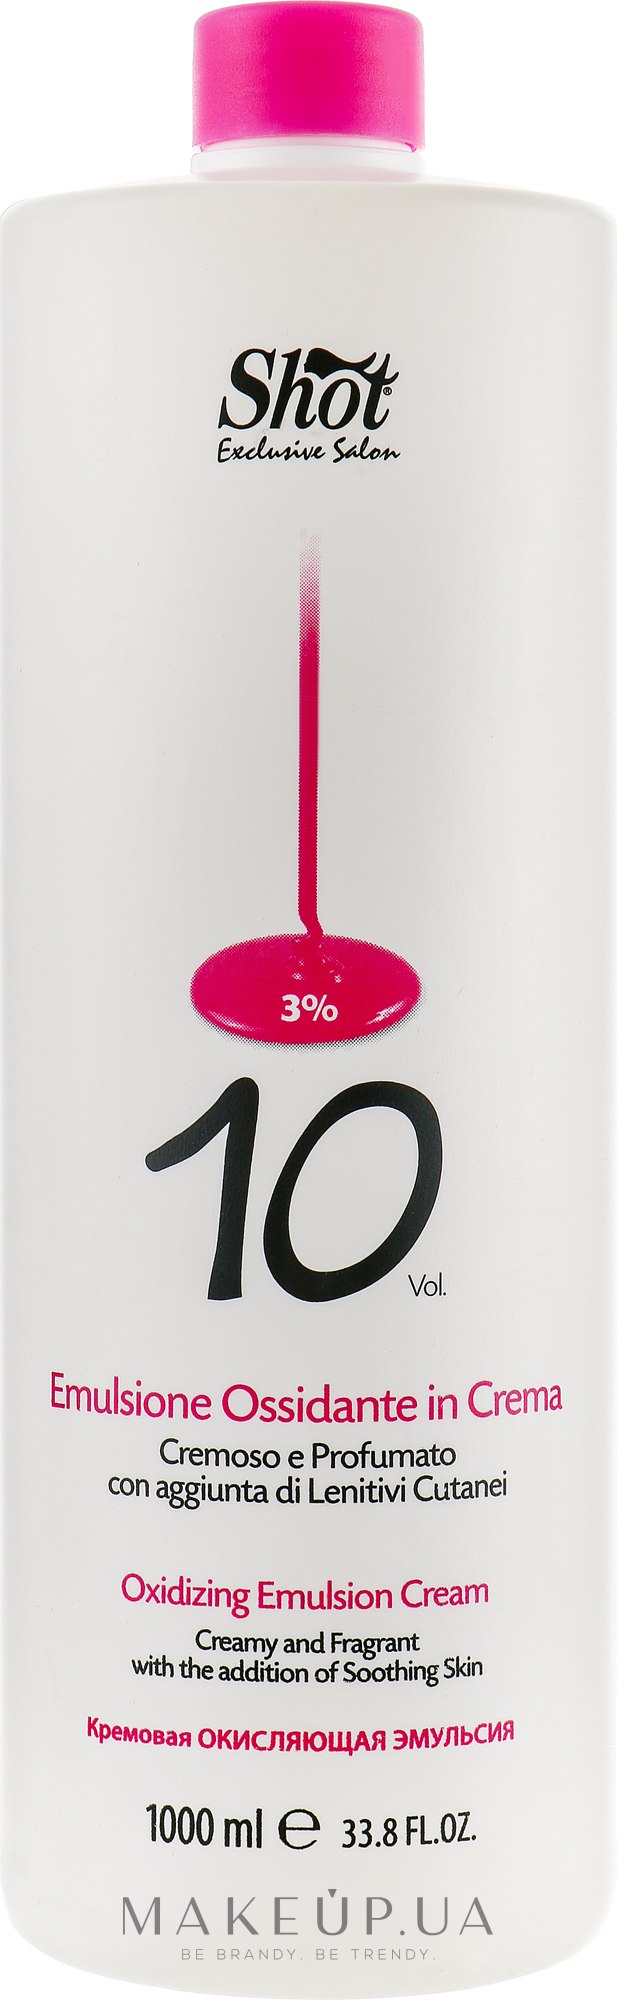 М'який проявник - Shot Scented Oxi Emulsion Cream 10 Vol — фото 1000ml